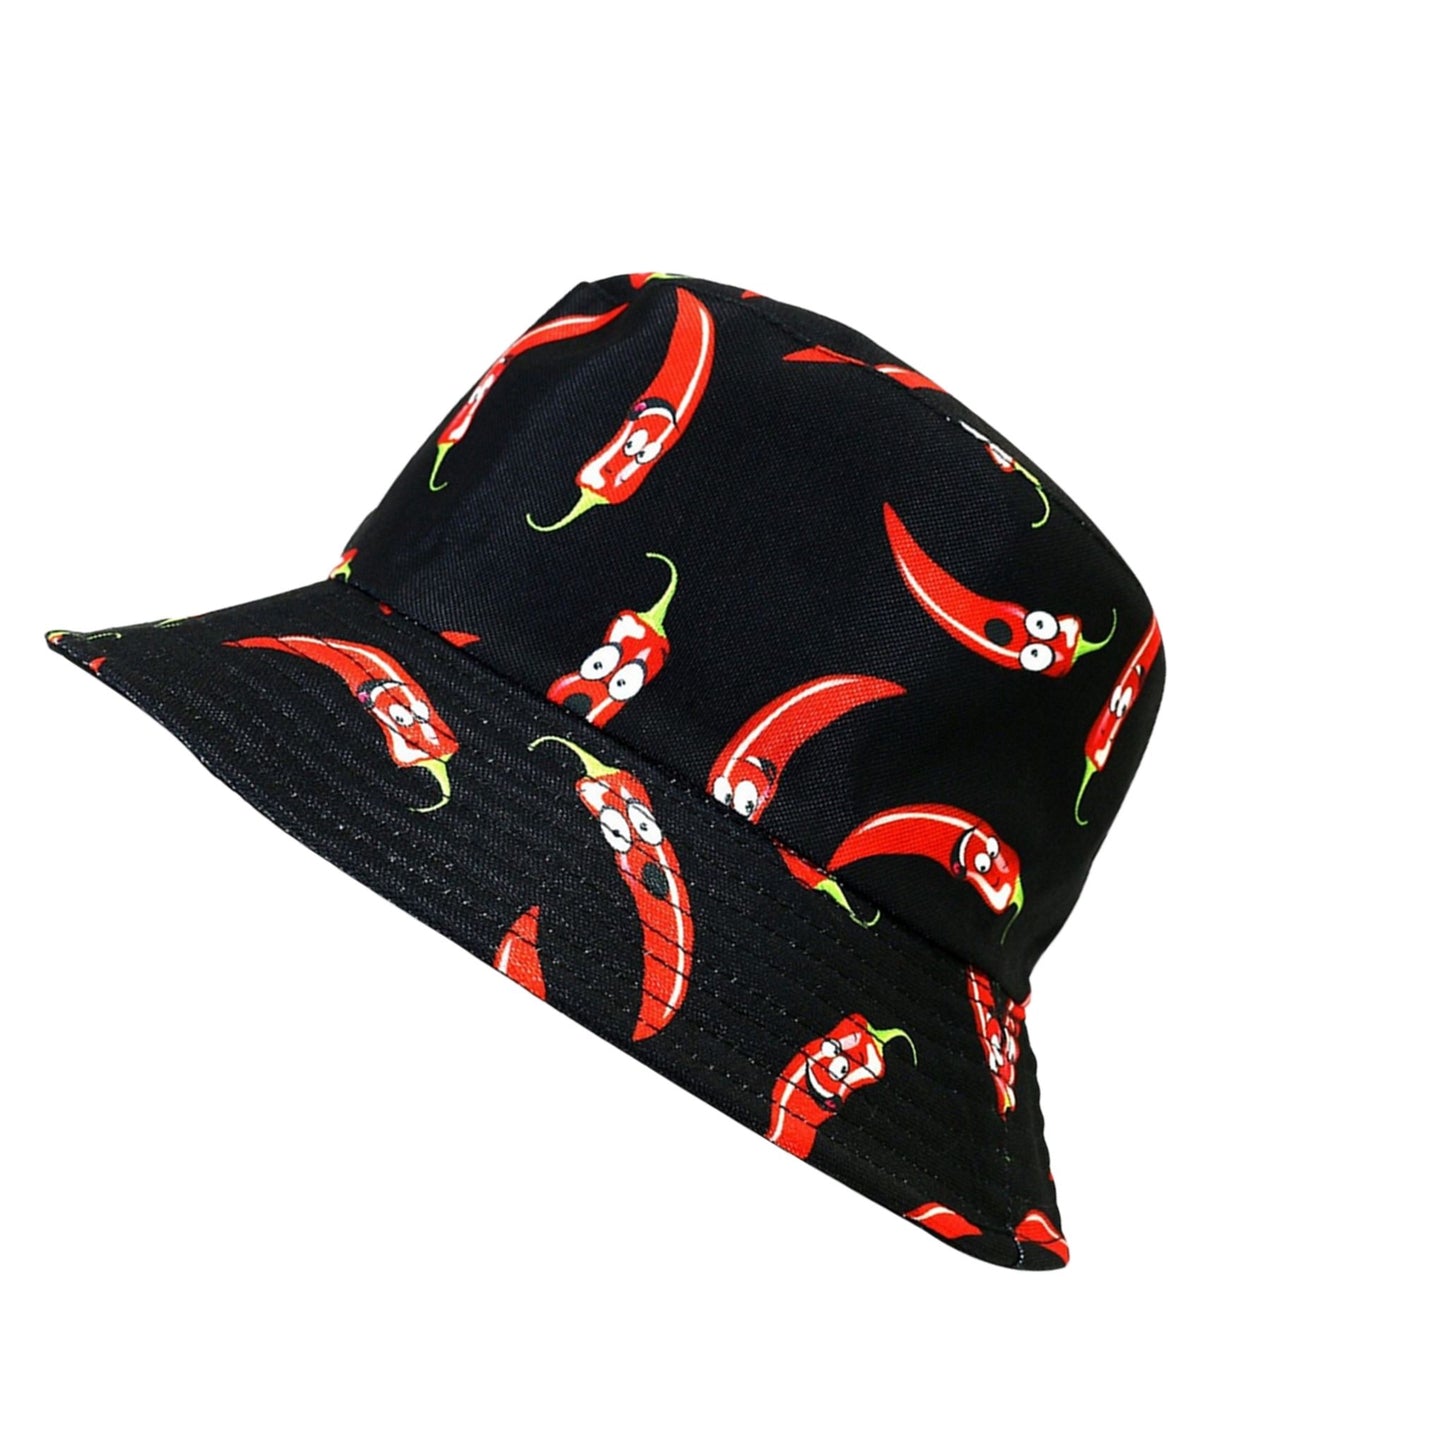 Bucket hat 100% cotton with reversible design, chillies black festival hat